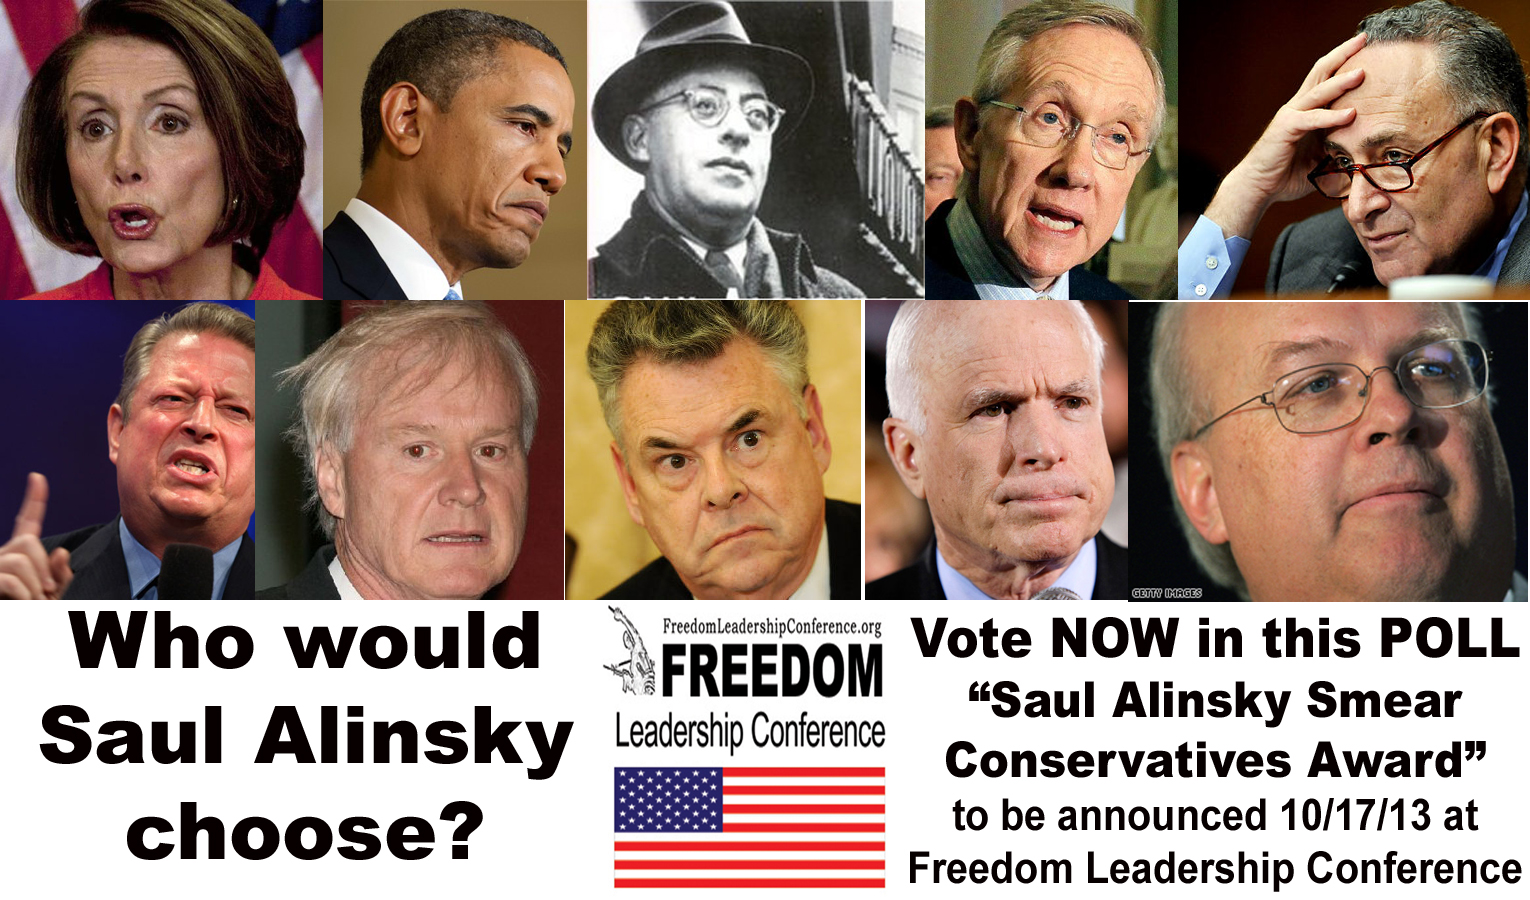 Freedom Leadership Conference will award a "Saul Alinsky Smear Conservatives" Award Thursday - who should it be?